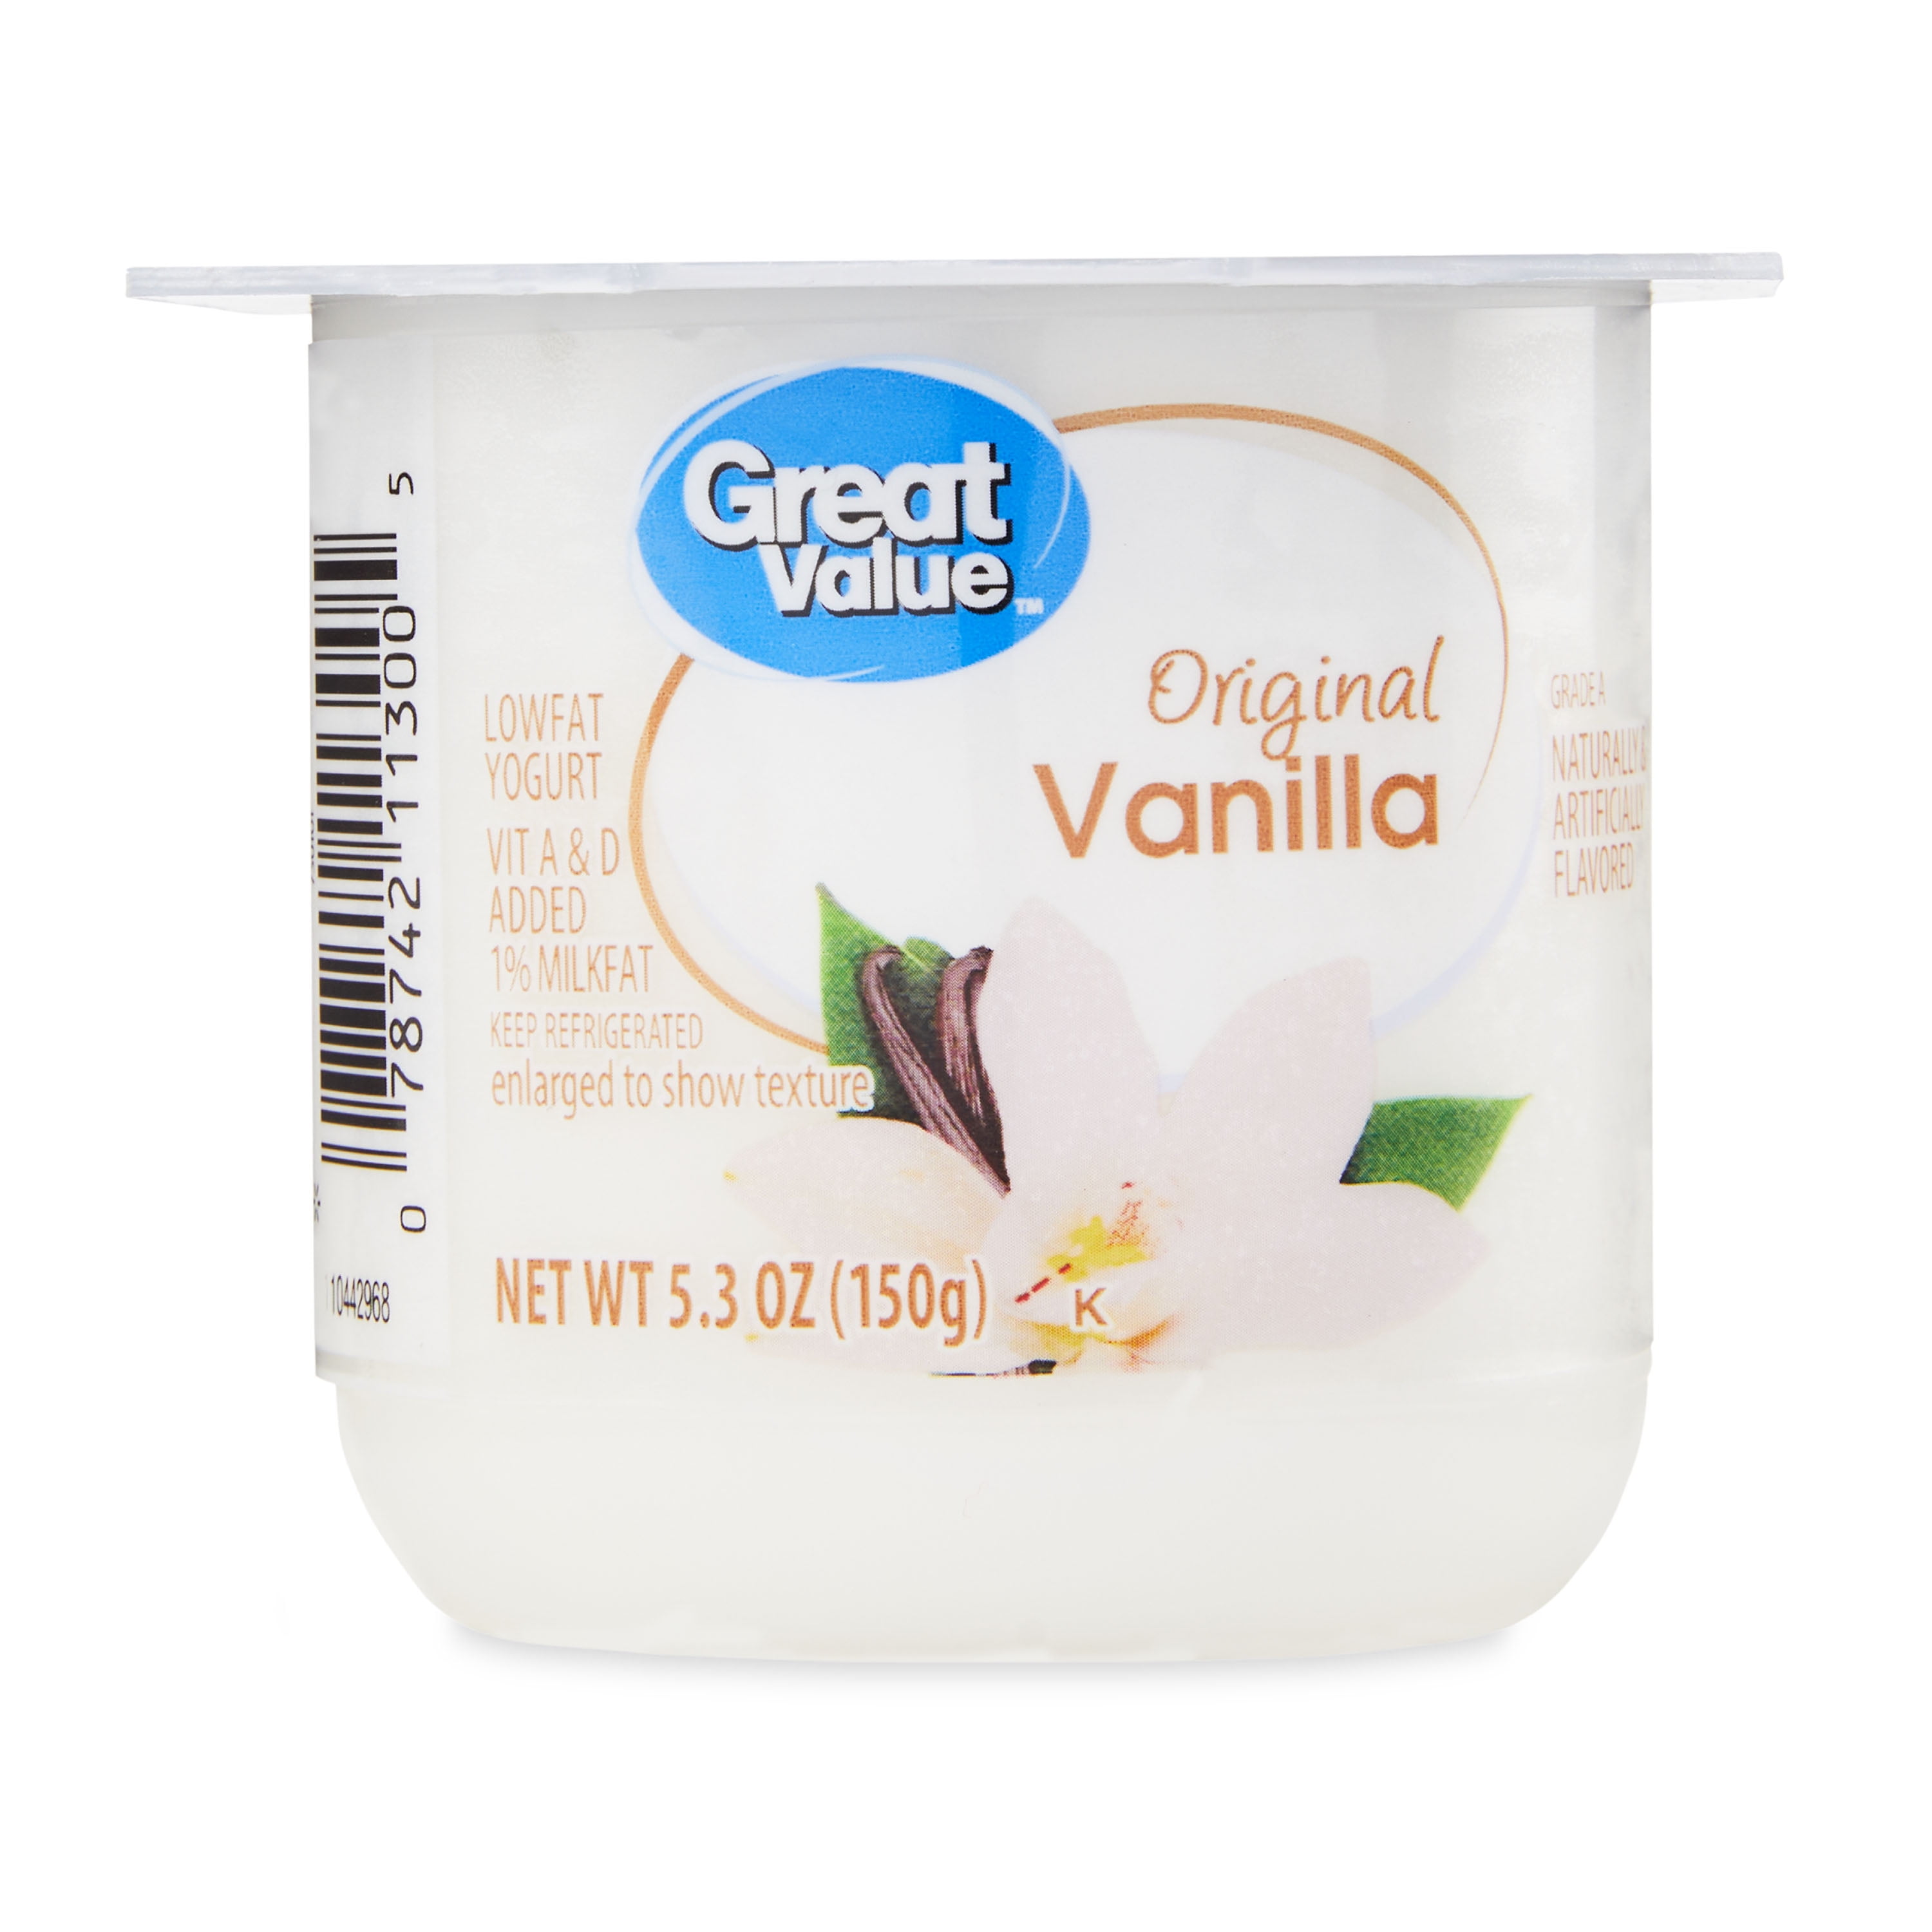 Great Value Original Vanilla Lowfat Yogurt, 5.3 oz